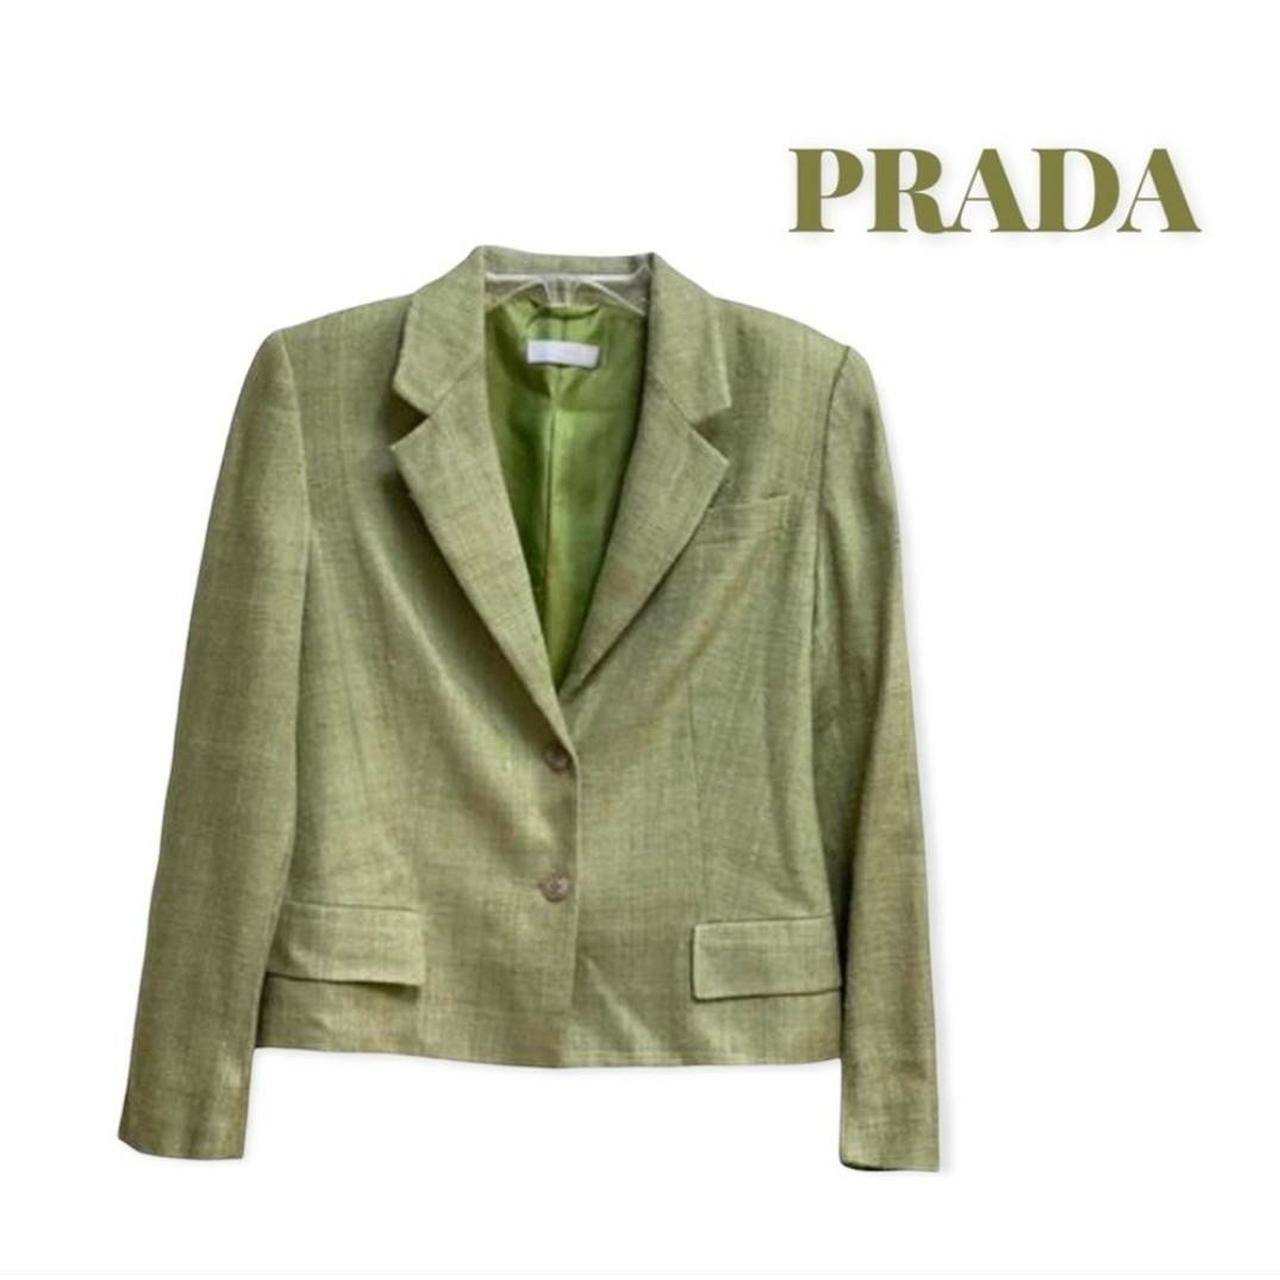 Prada Women's Green Jacket